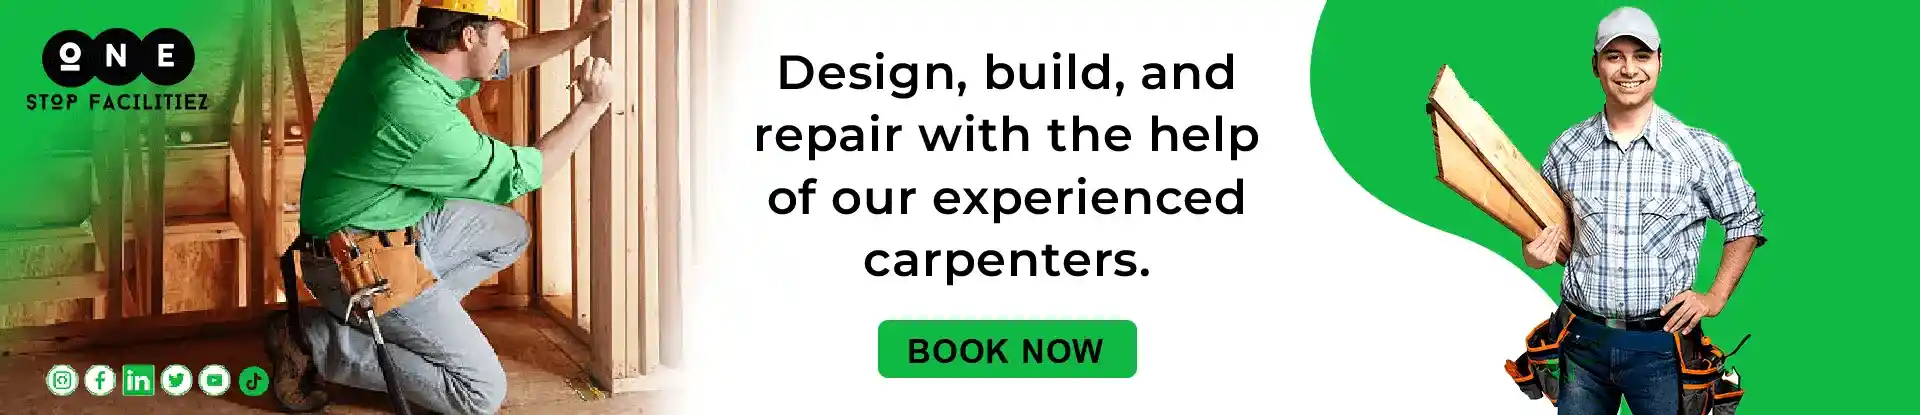 Carpentry service Image